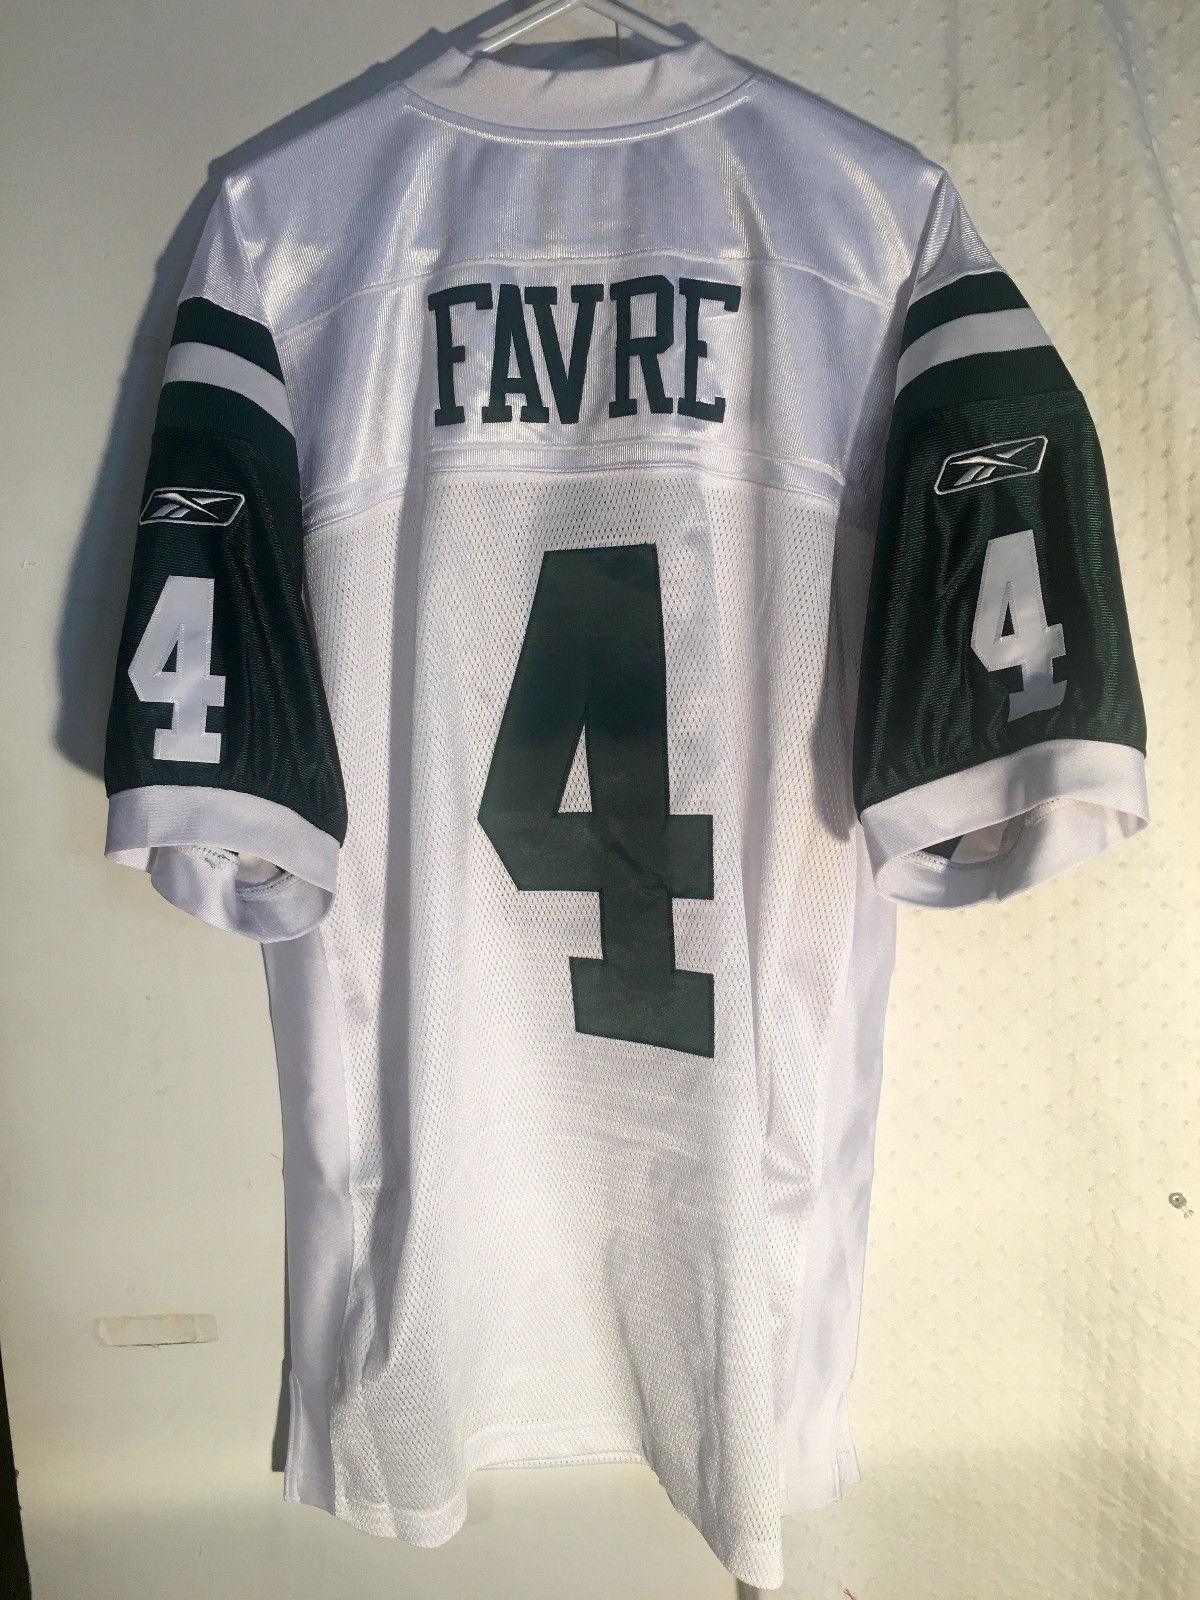 Brett Favre Authentic New York Jets Jersey by Reebok, Green, size 52